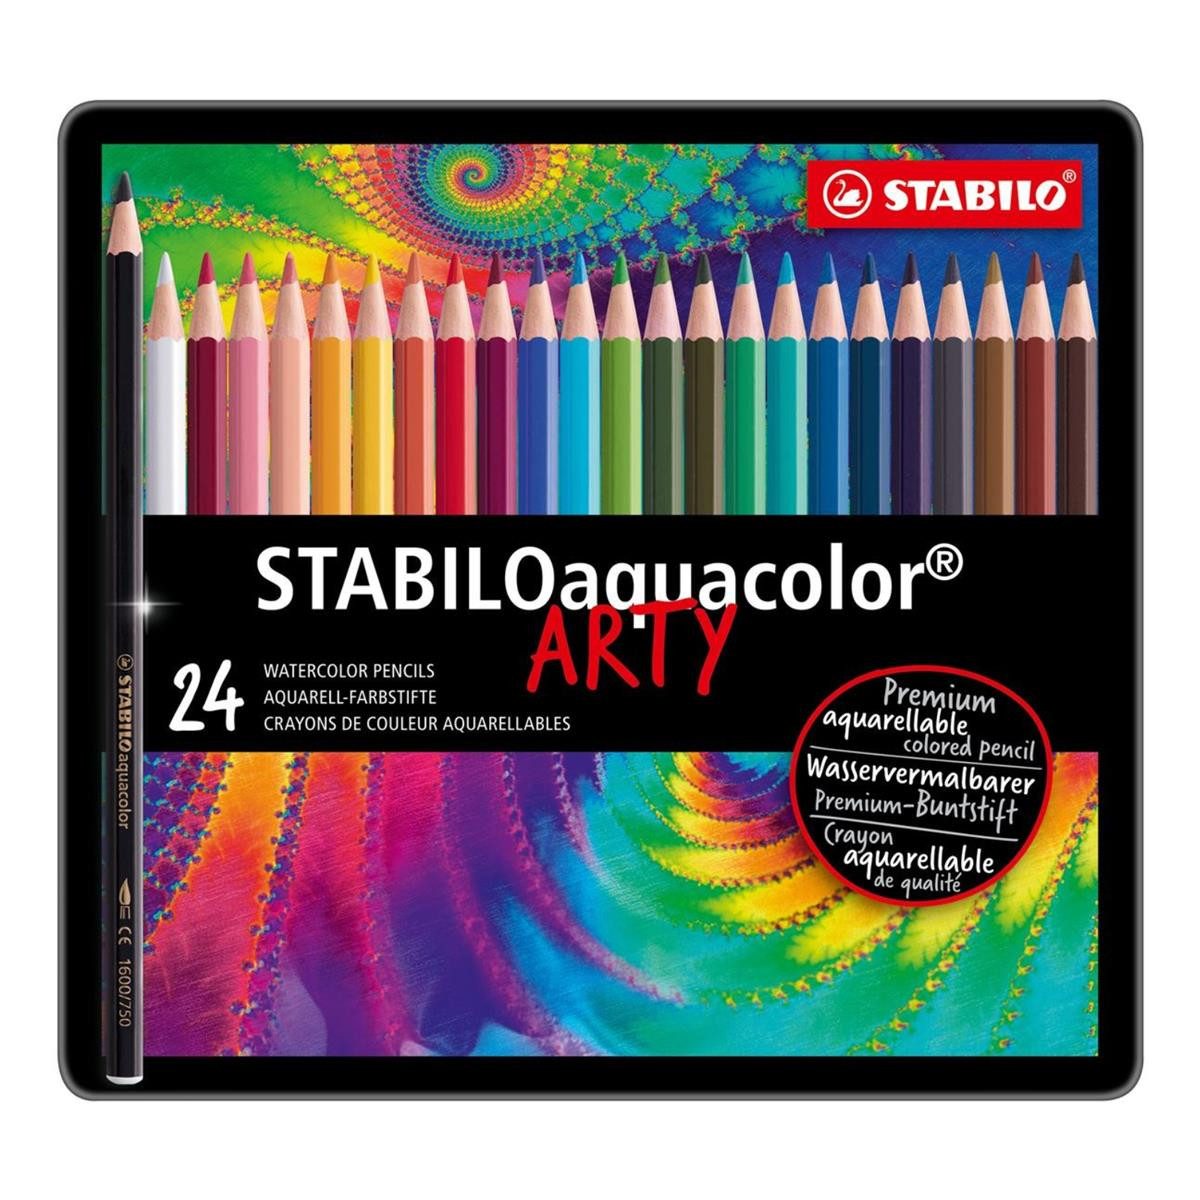 STABILO Aquarellstifte STABILO aquacolor ARTY Aquarell-Farbstift - 24er Metalletui